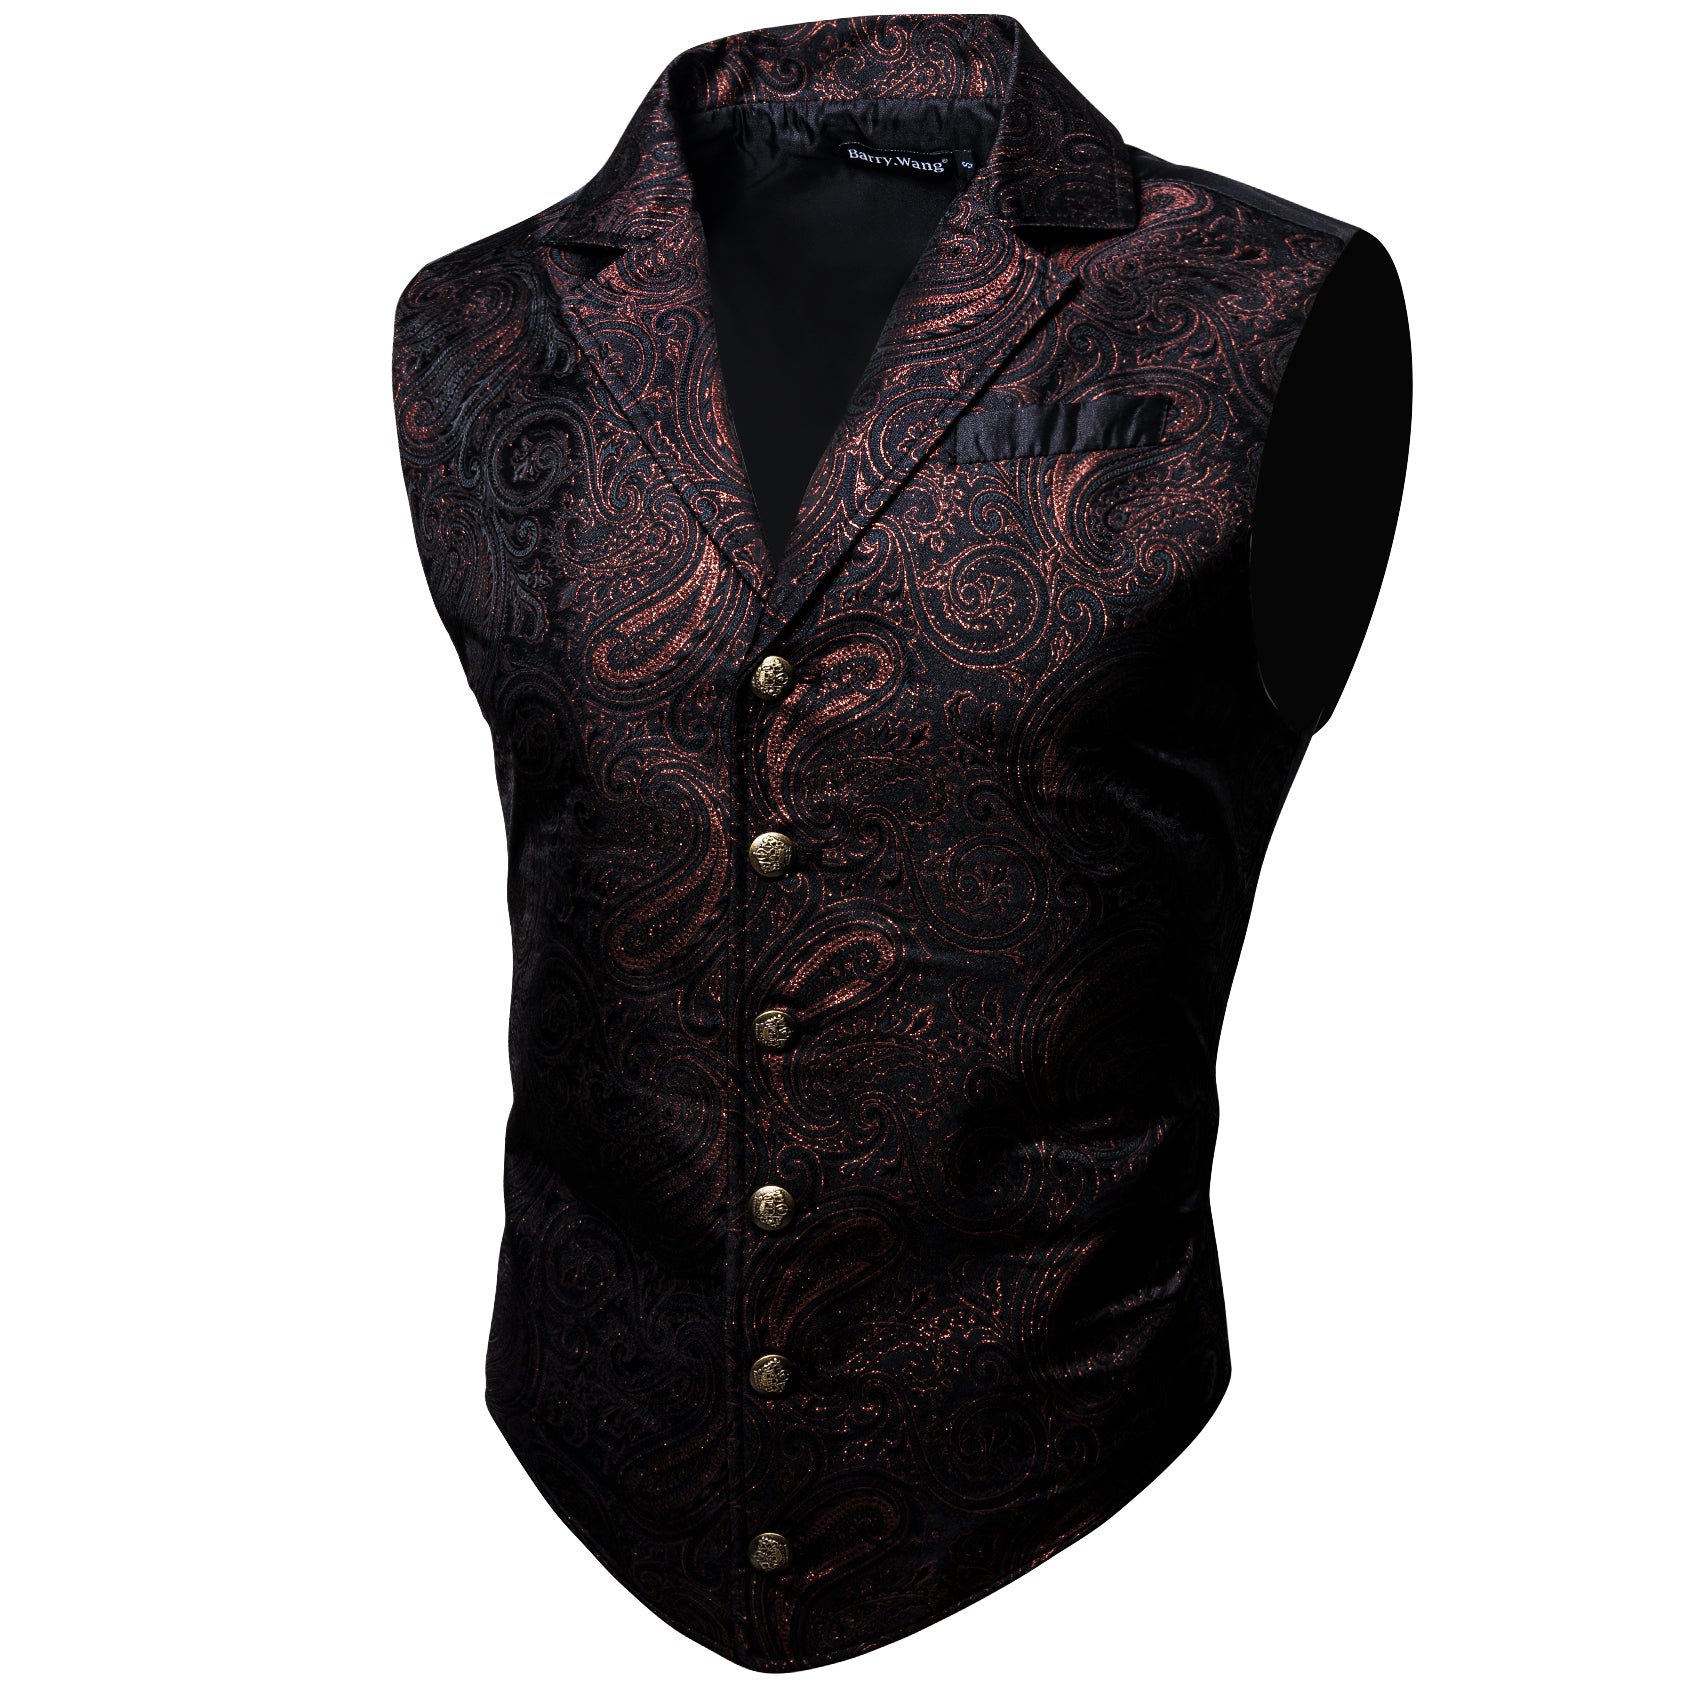 Barry.wang Men's Vest Red Brown Paisley Jacquard Floral Silk Waistcoat Vest